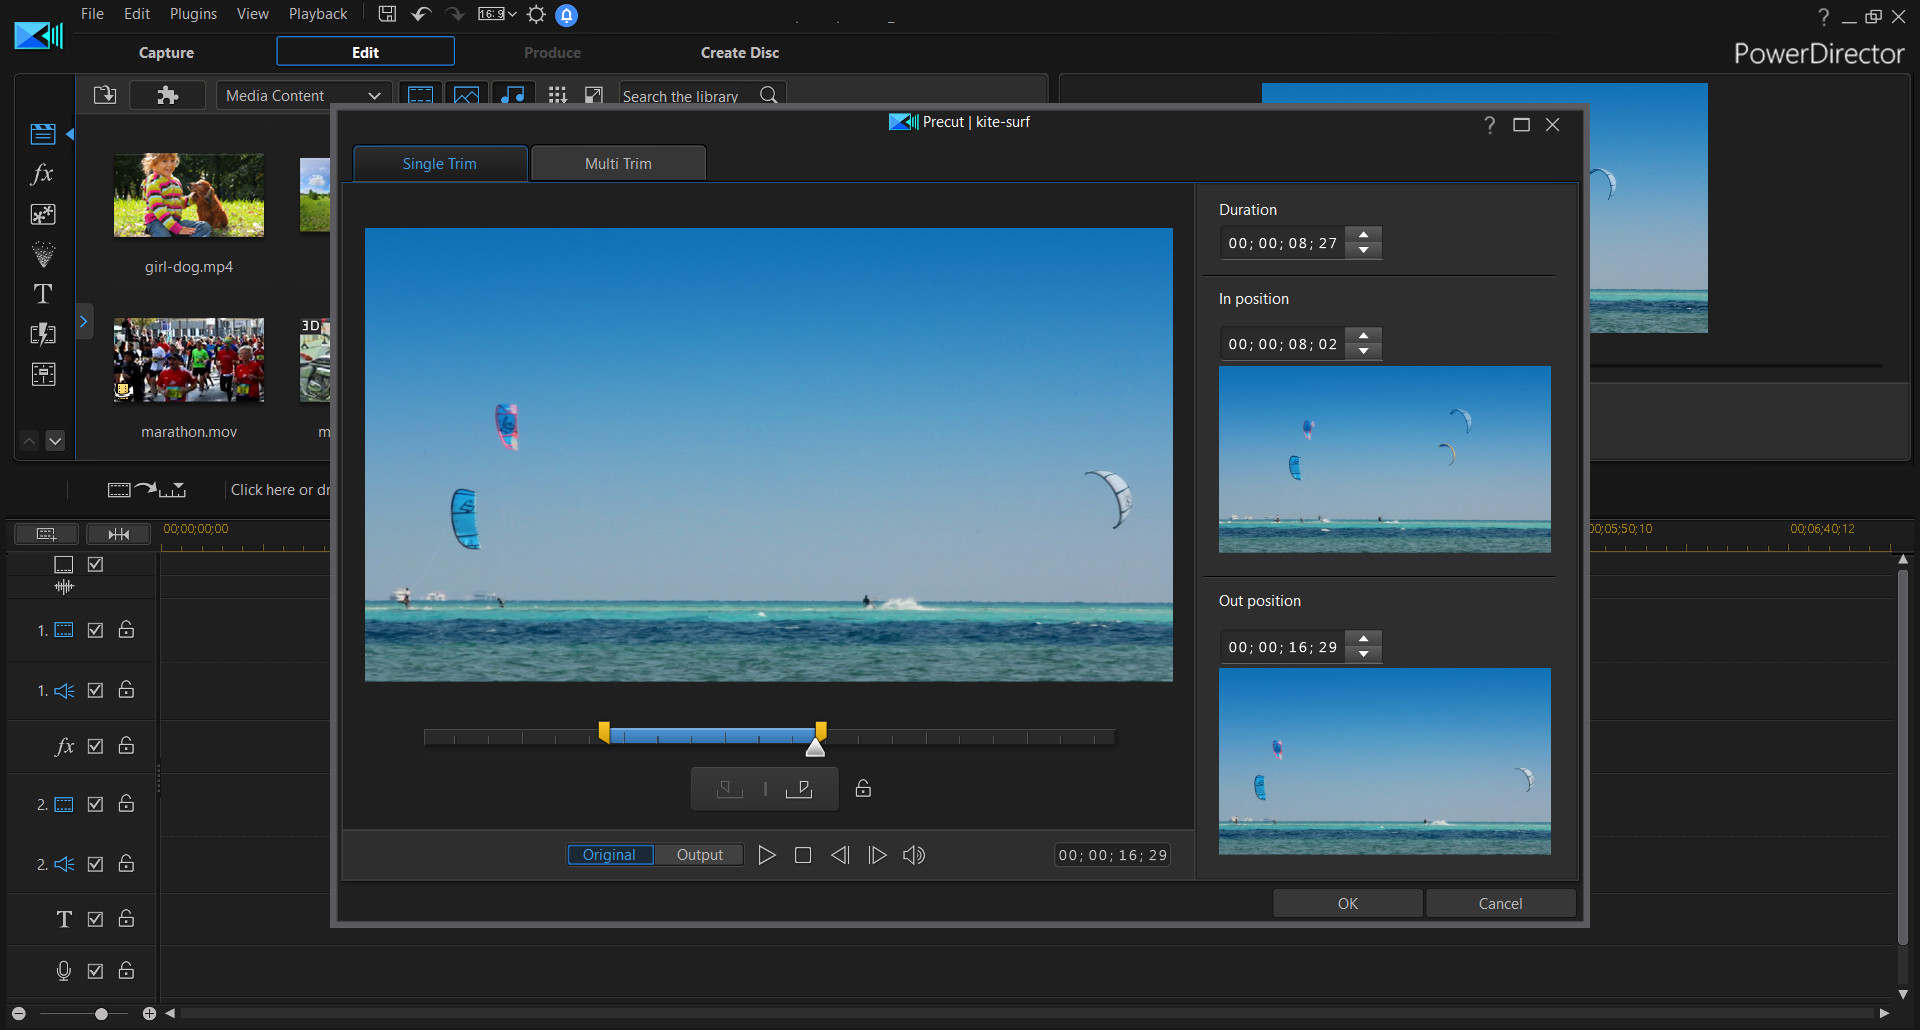 PowerDirector 17 Ultimate - Video editing, Video editor, making videos screenshot